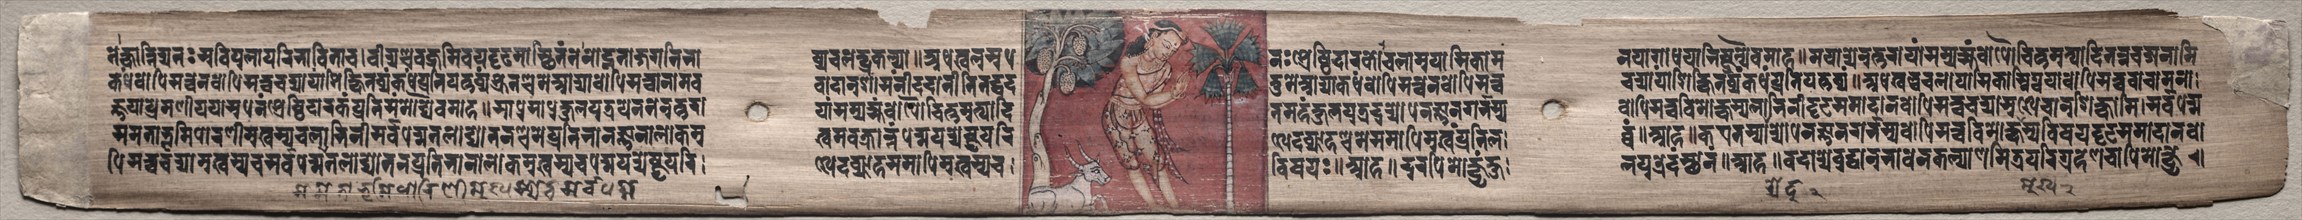 Leaf from Gandavyuha: Sudhana in a Landscape, from Chapter 22 Achala (recto); Leaf from Gandavyuha: